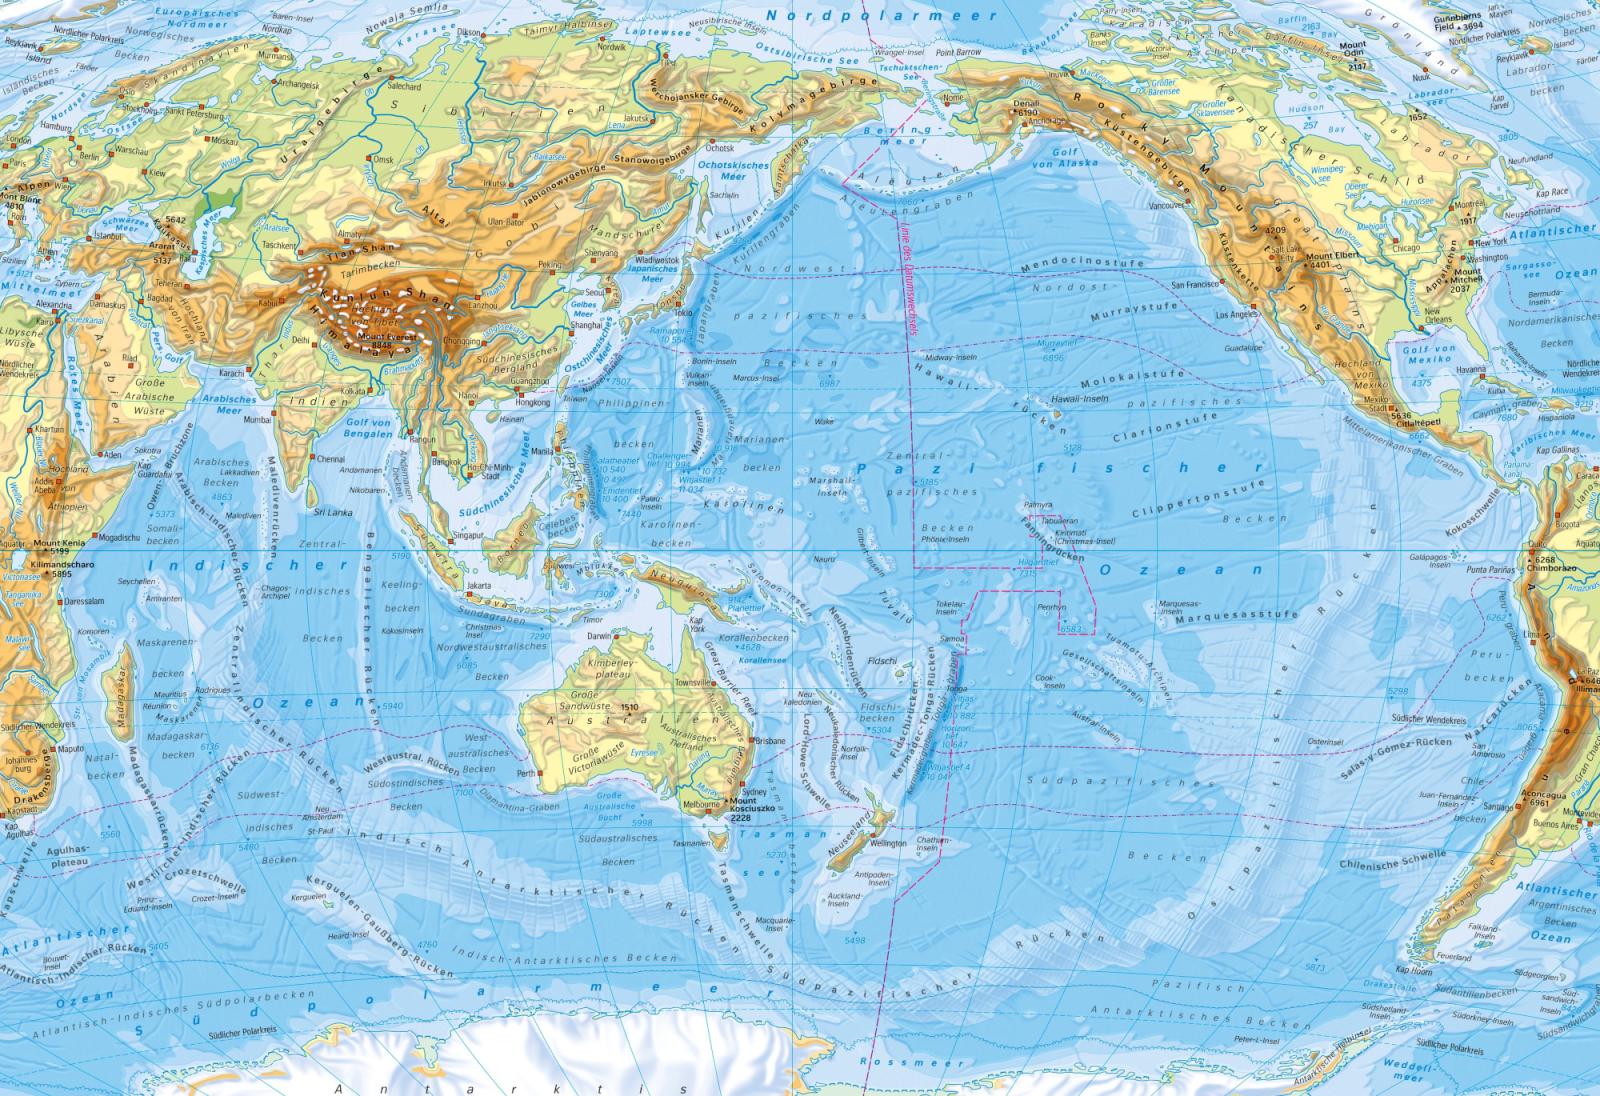 Южная часть индийского океана. Тихий океан на карте. Острова Тихого океана на карте. Т̊и̊х̊и̊й̊ о̊к̊е̊а̊н̊ н̊а̊ к̊а̊р̊р̊ т̊т̊е̊. Карта Тихого океана географическая.